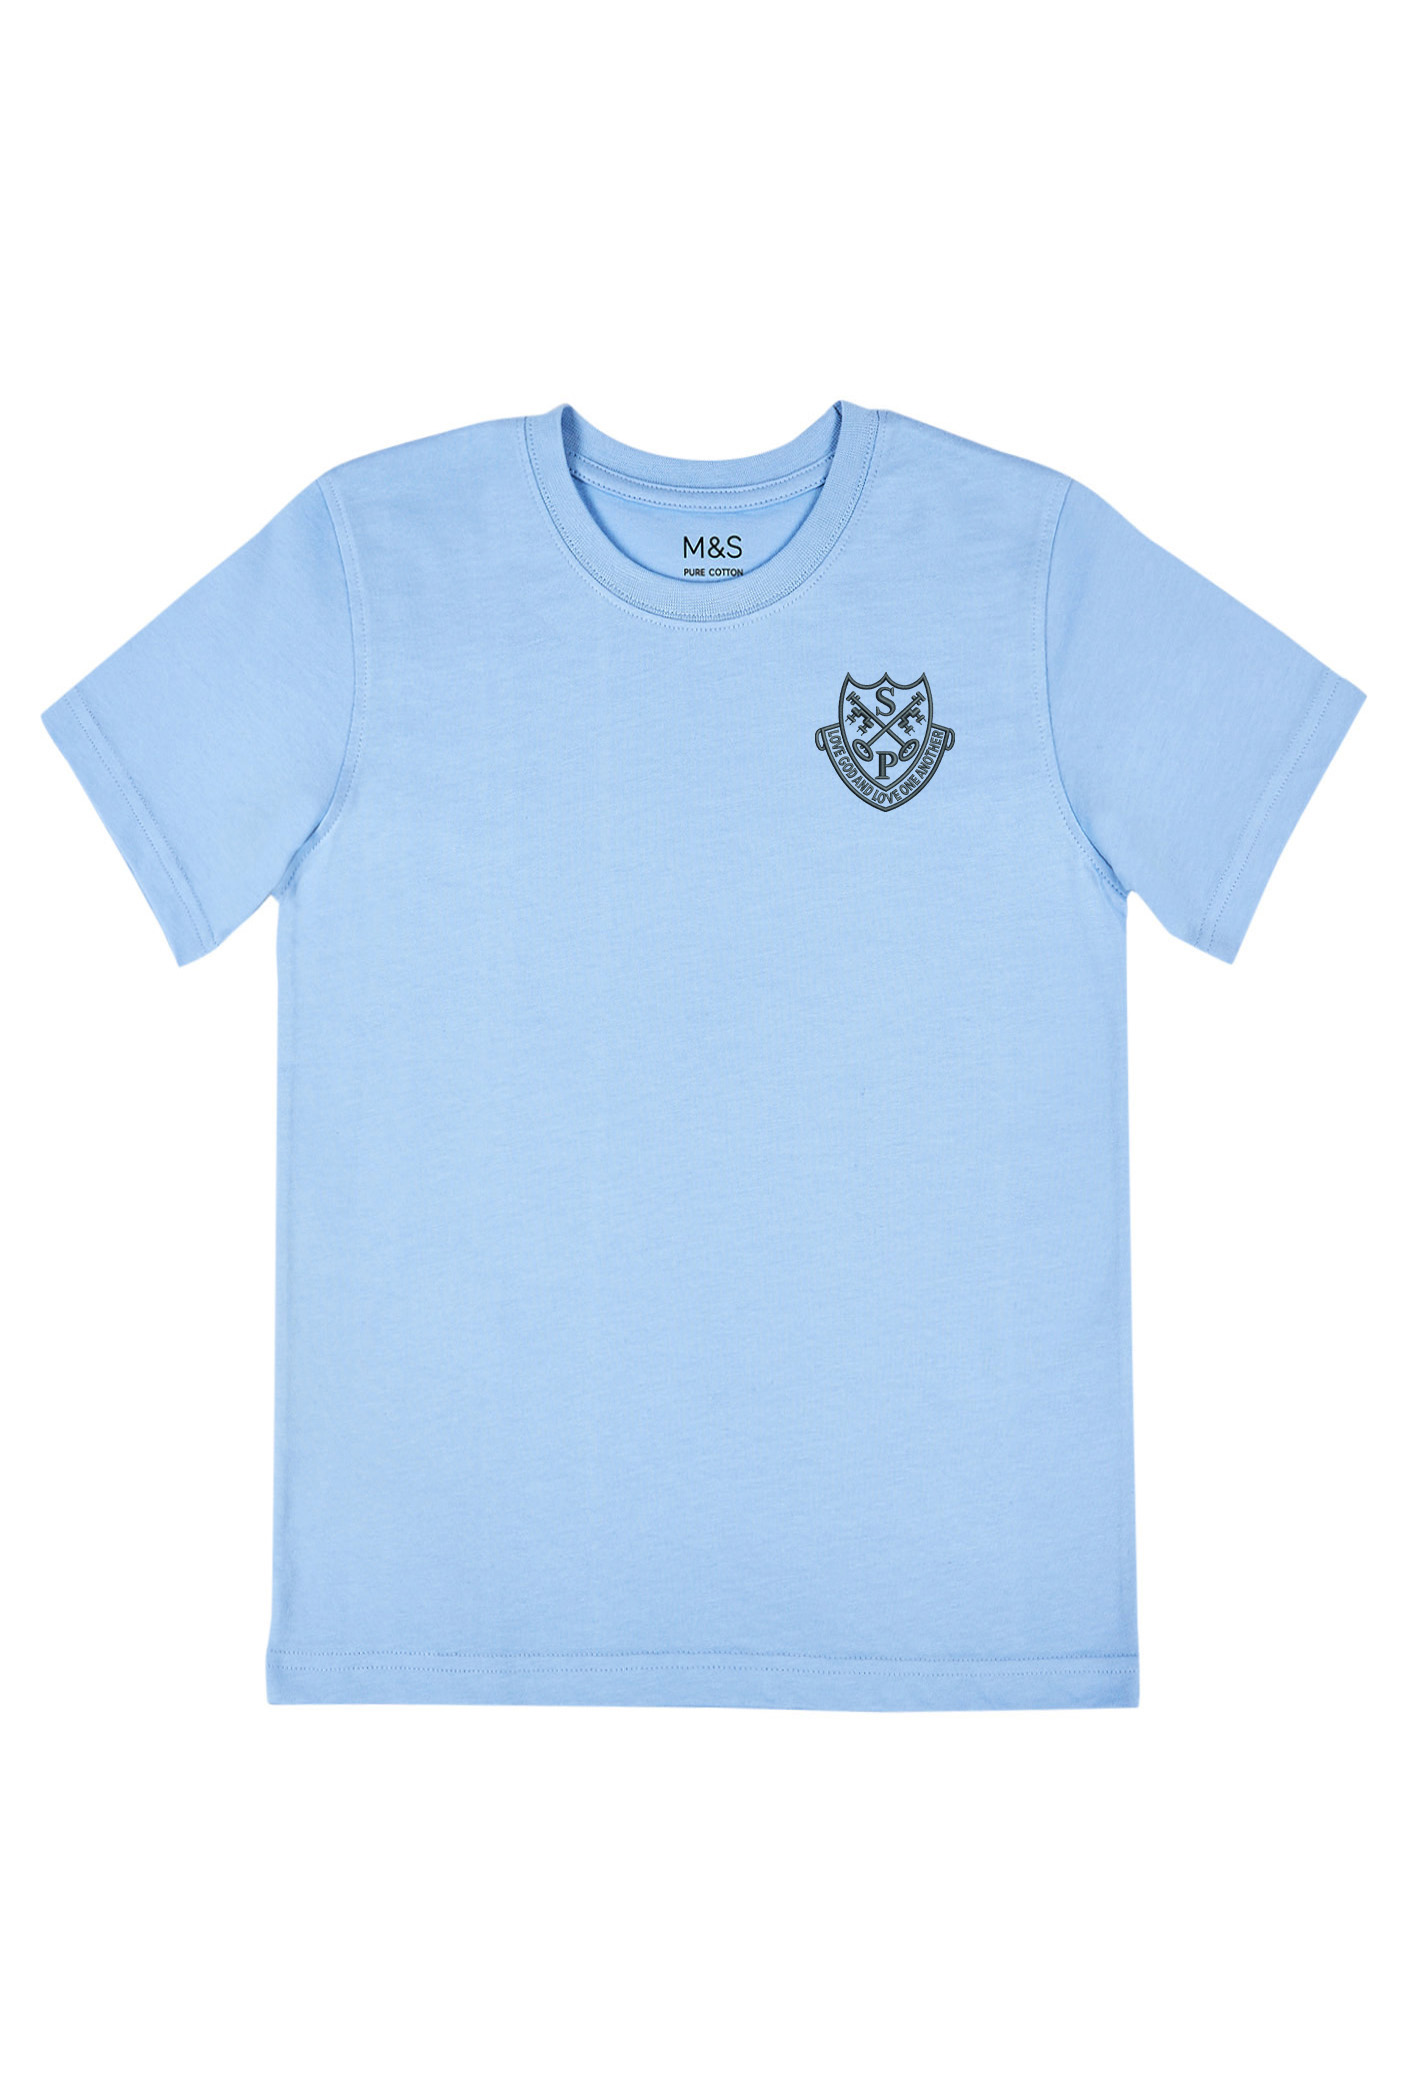 St Peters Catholic First School Unisex Pure Cotton T-shirt